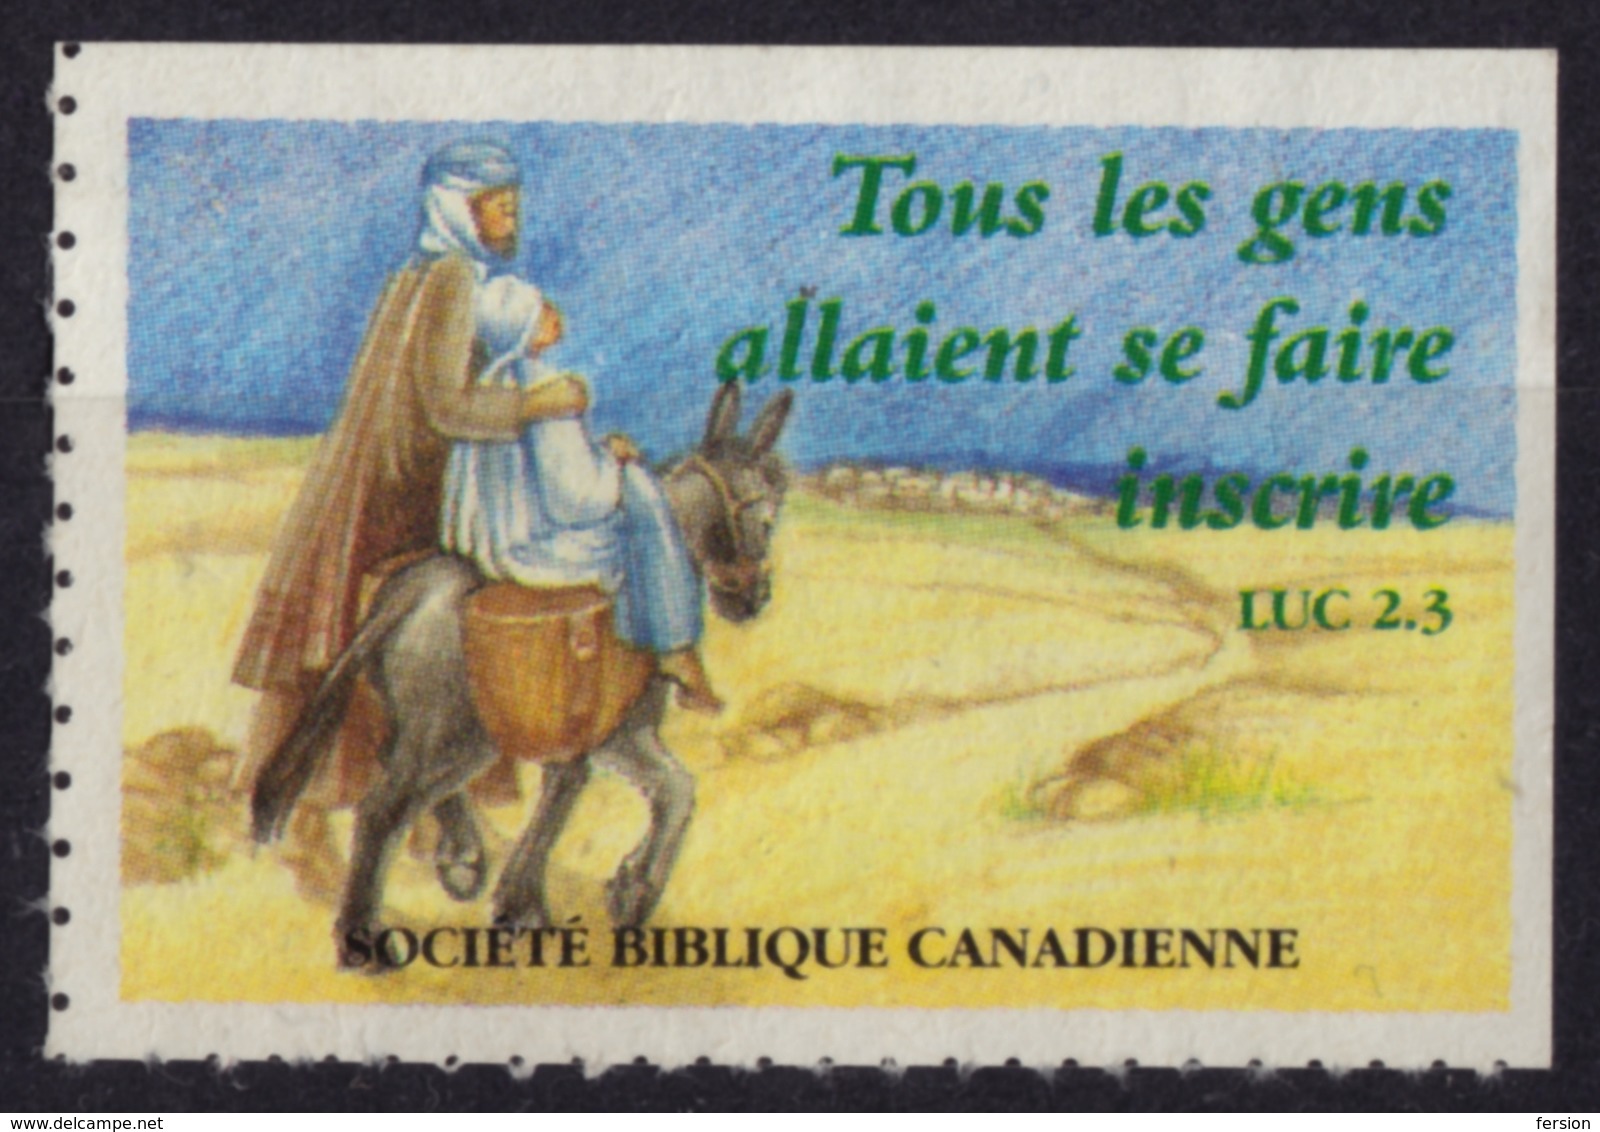 CANADA Bible Society / Christianity - Charity Stamp / Label / Cinderella / Vignette  - Used - Mary Joseph Donkey - Donkeys